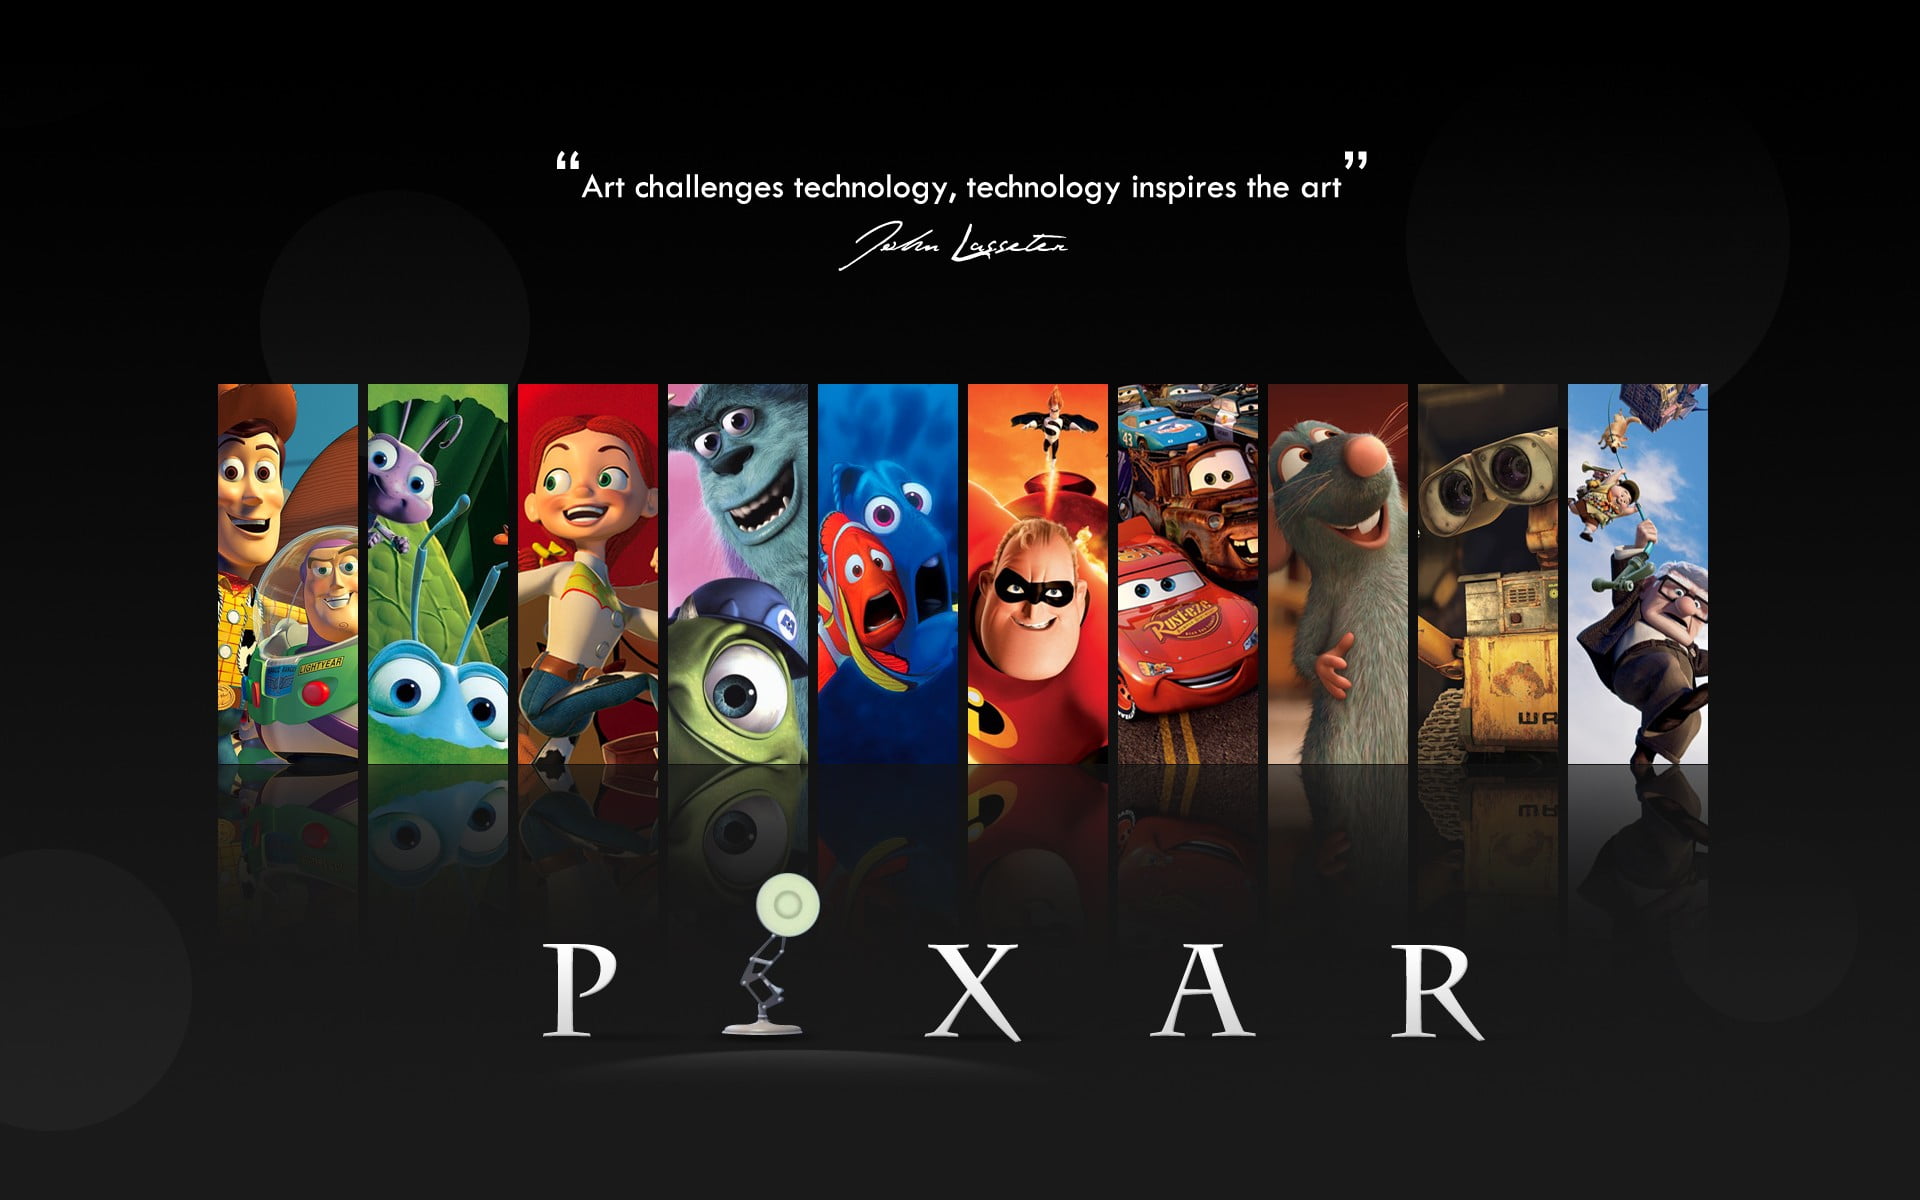 PIXAR advertisement, Disney Pixar, Pixar Animation Studios, movies, animated movies